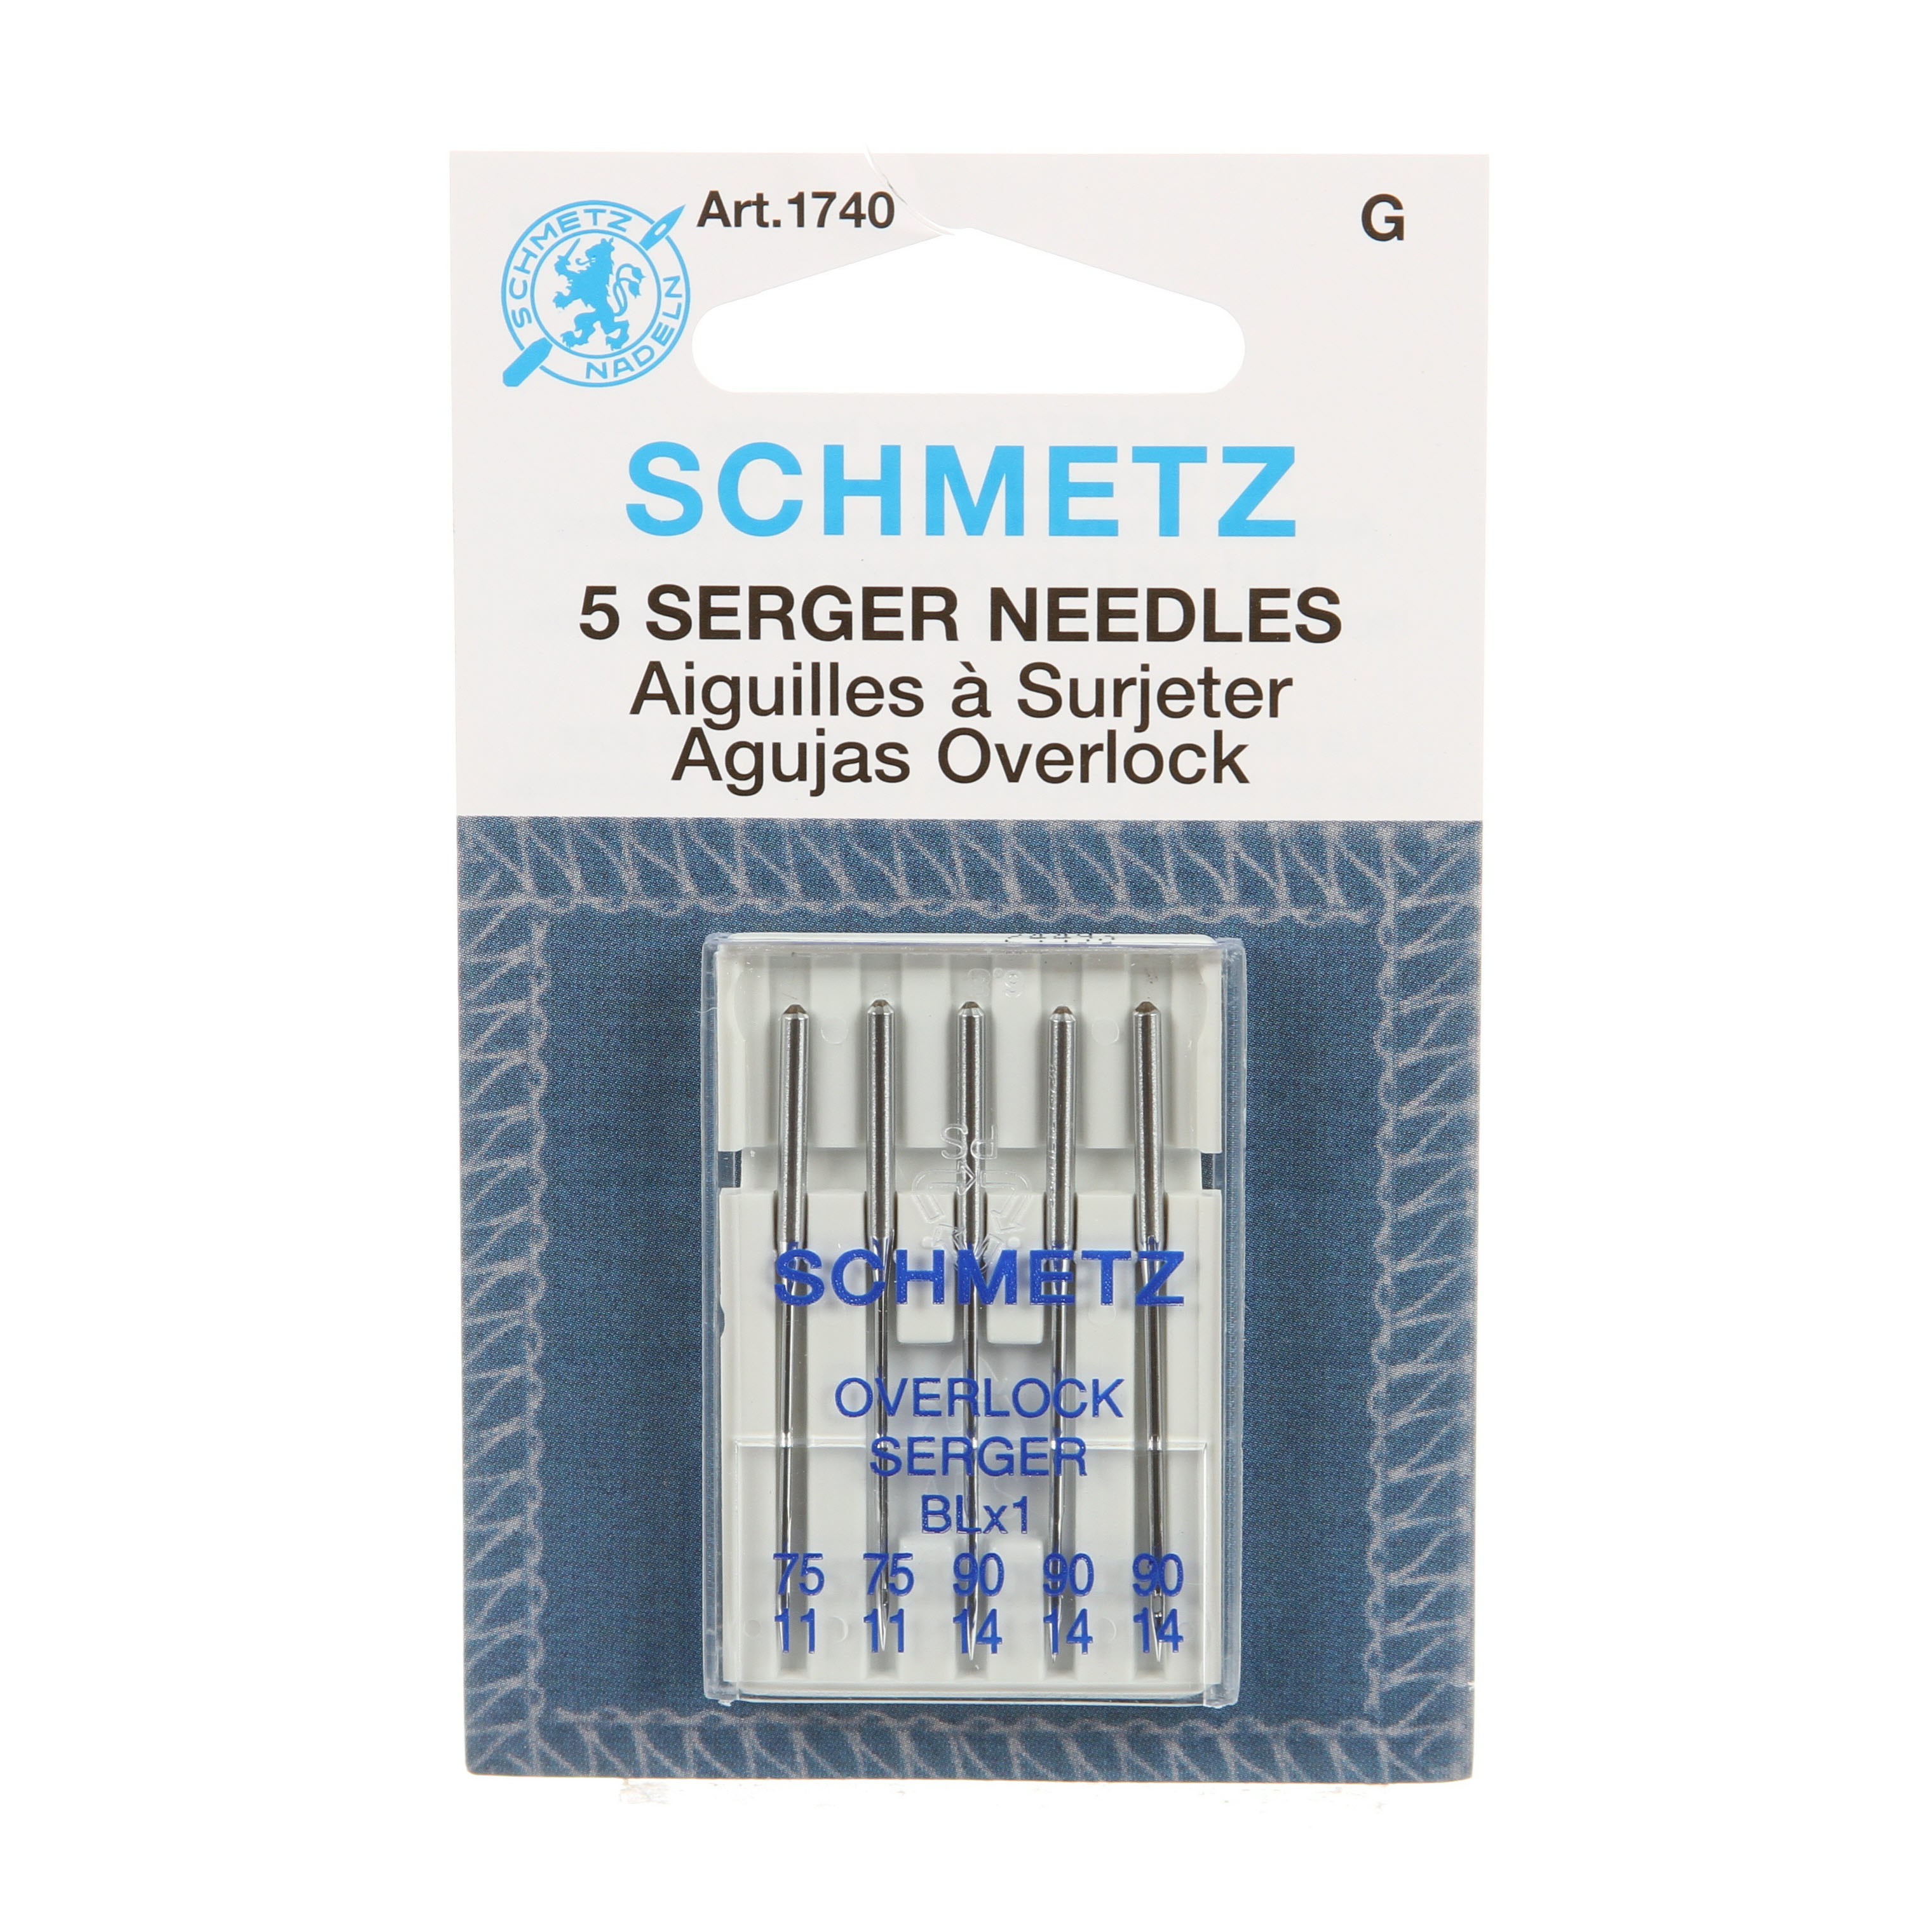 Schmetz Universal Machine Needle Assorted Sizes 70/80/90 5ct